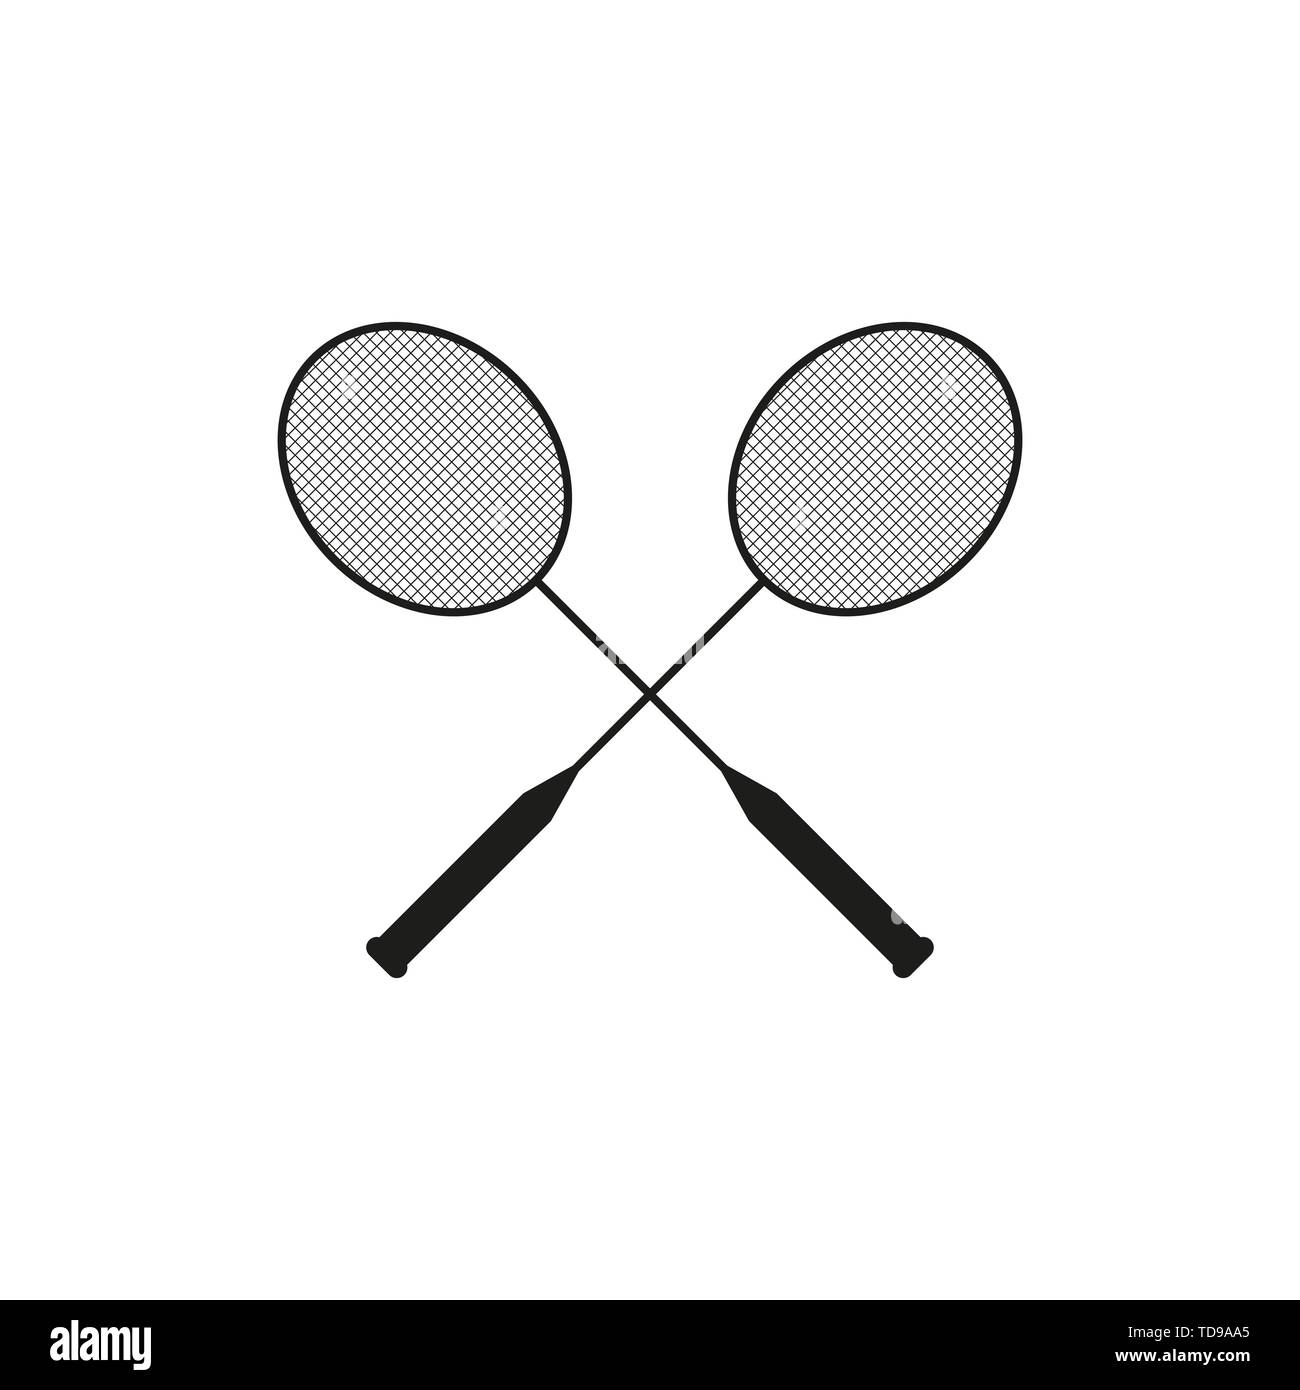 Badminton racket icon isolated on background. Vector Stock Vector Image &  Art - Alamy